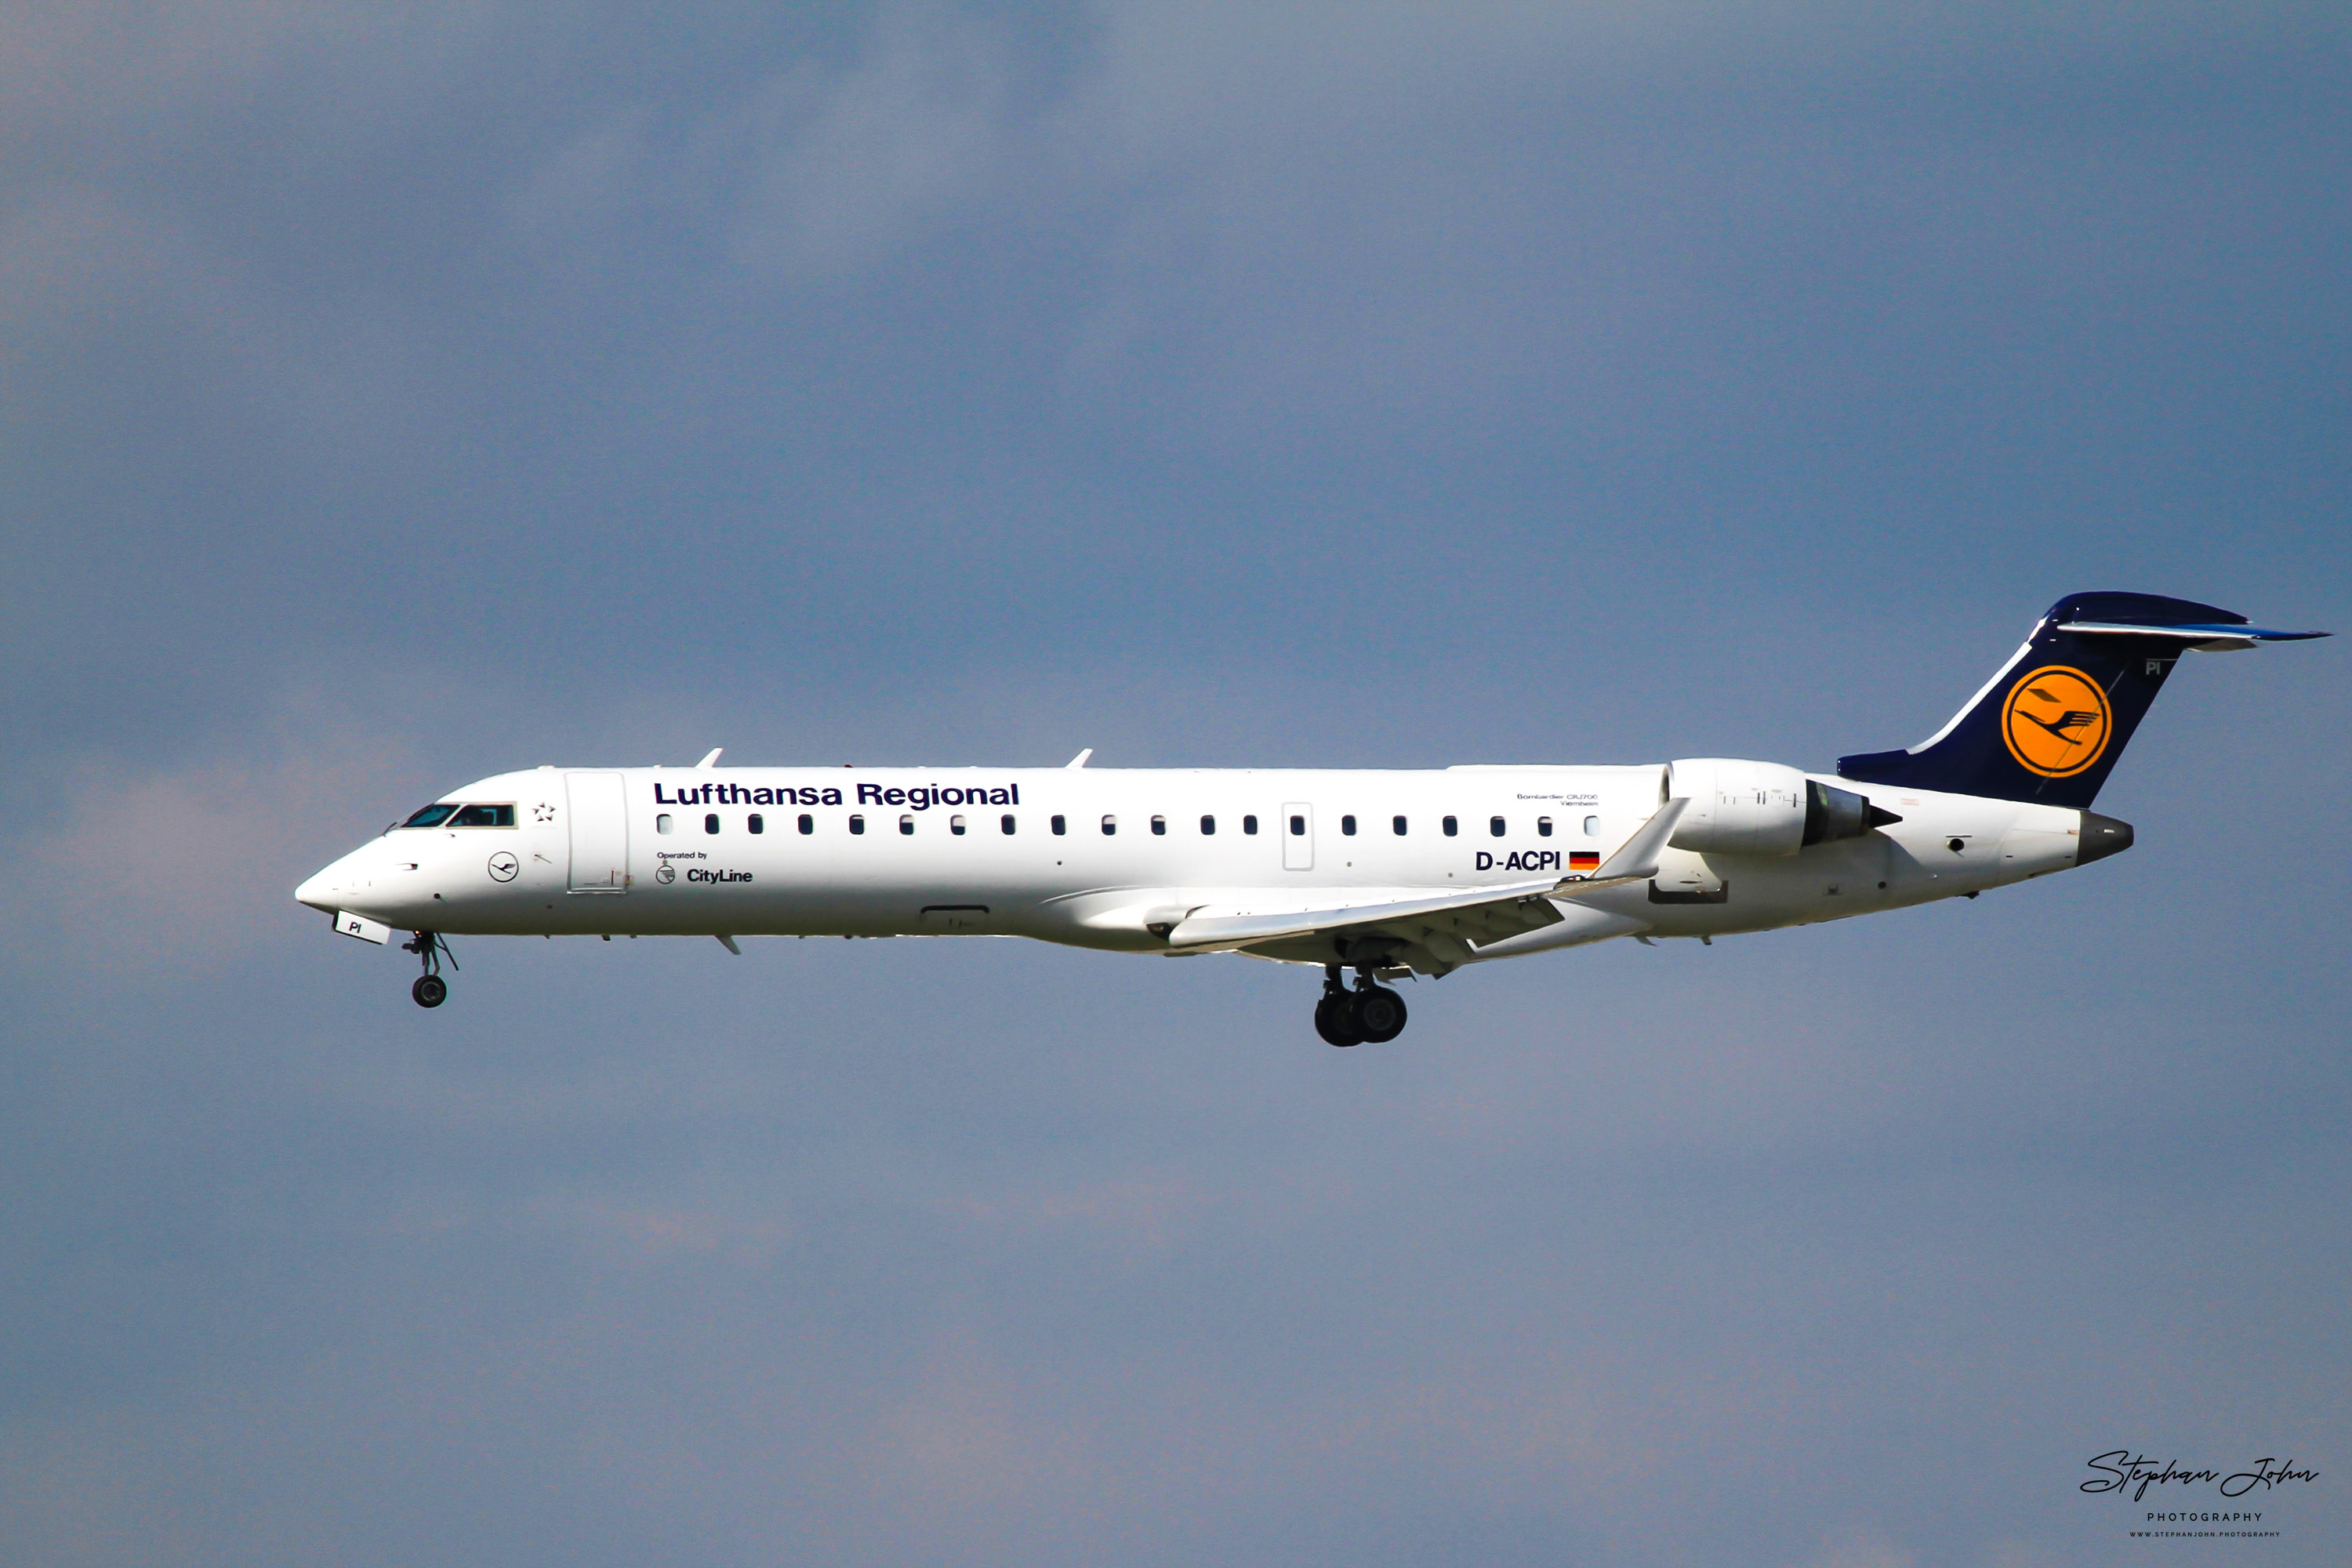 Bombardier CRJ-700 